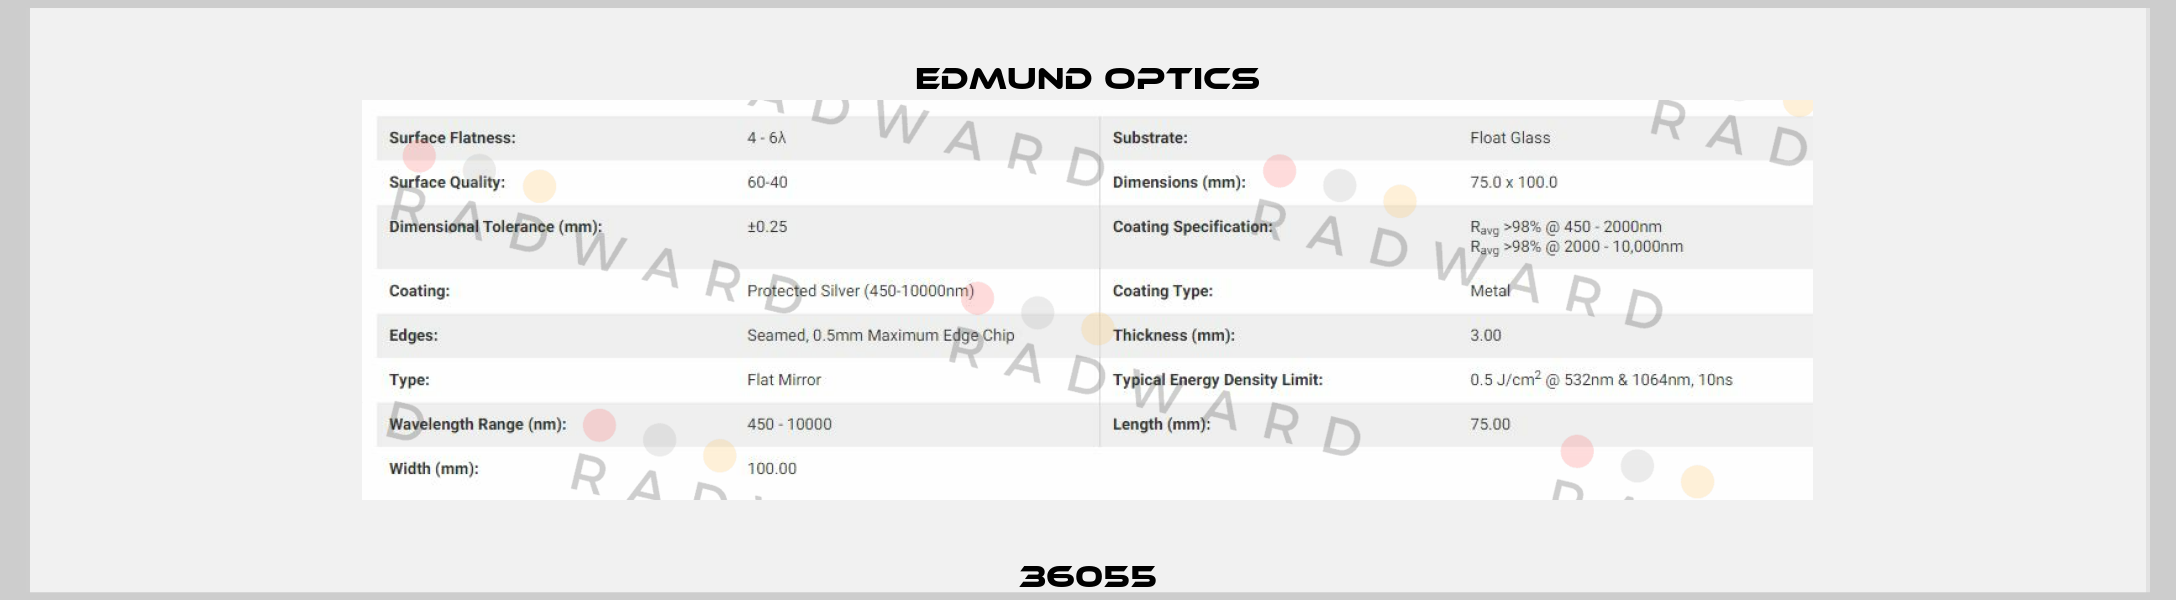 36055 Edmund Optics